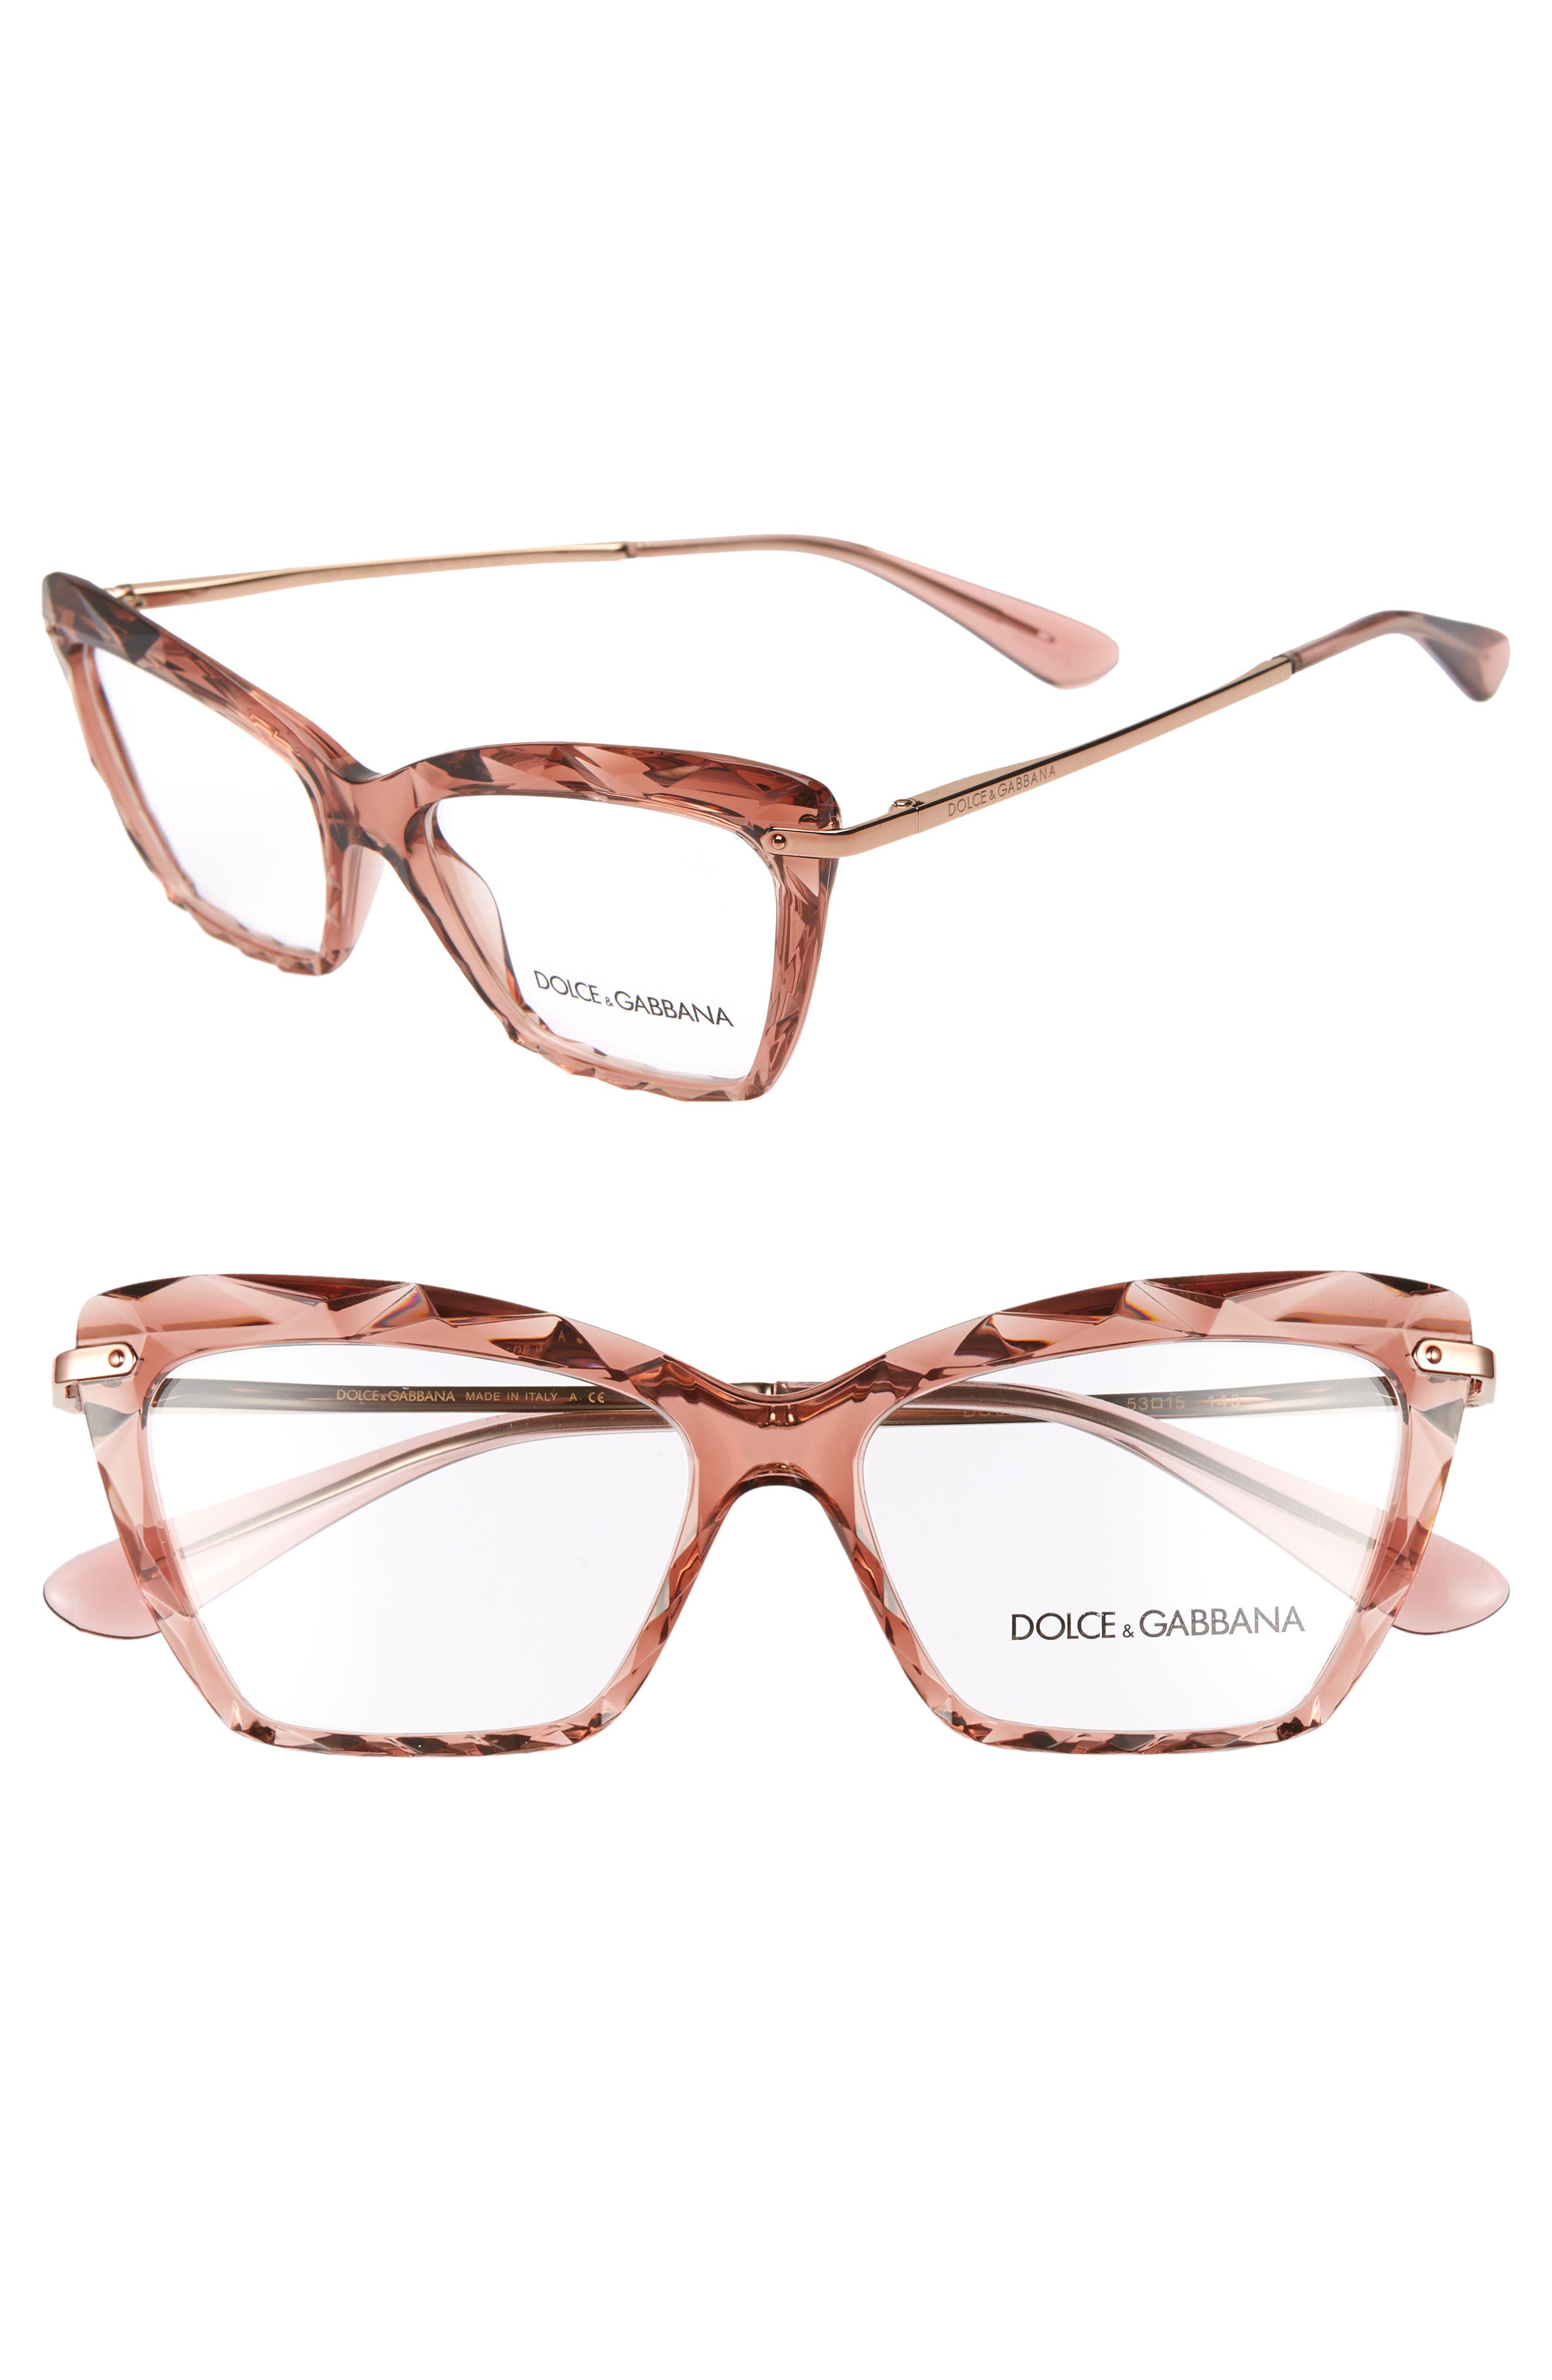 dolce and gabbana cat eyeglasses